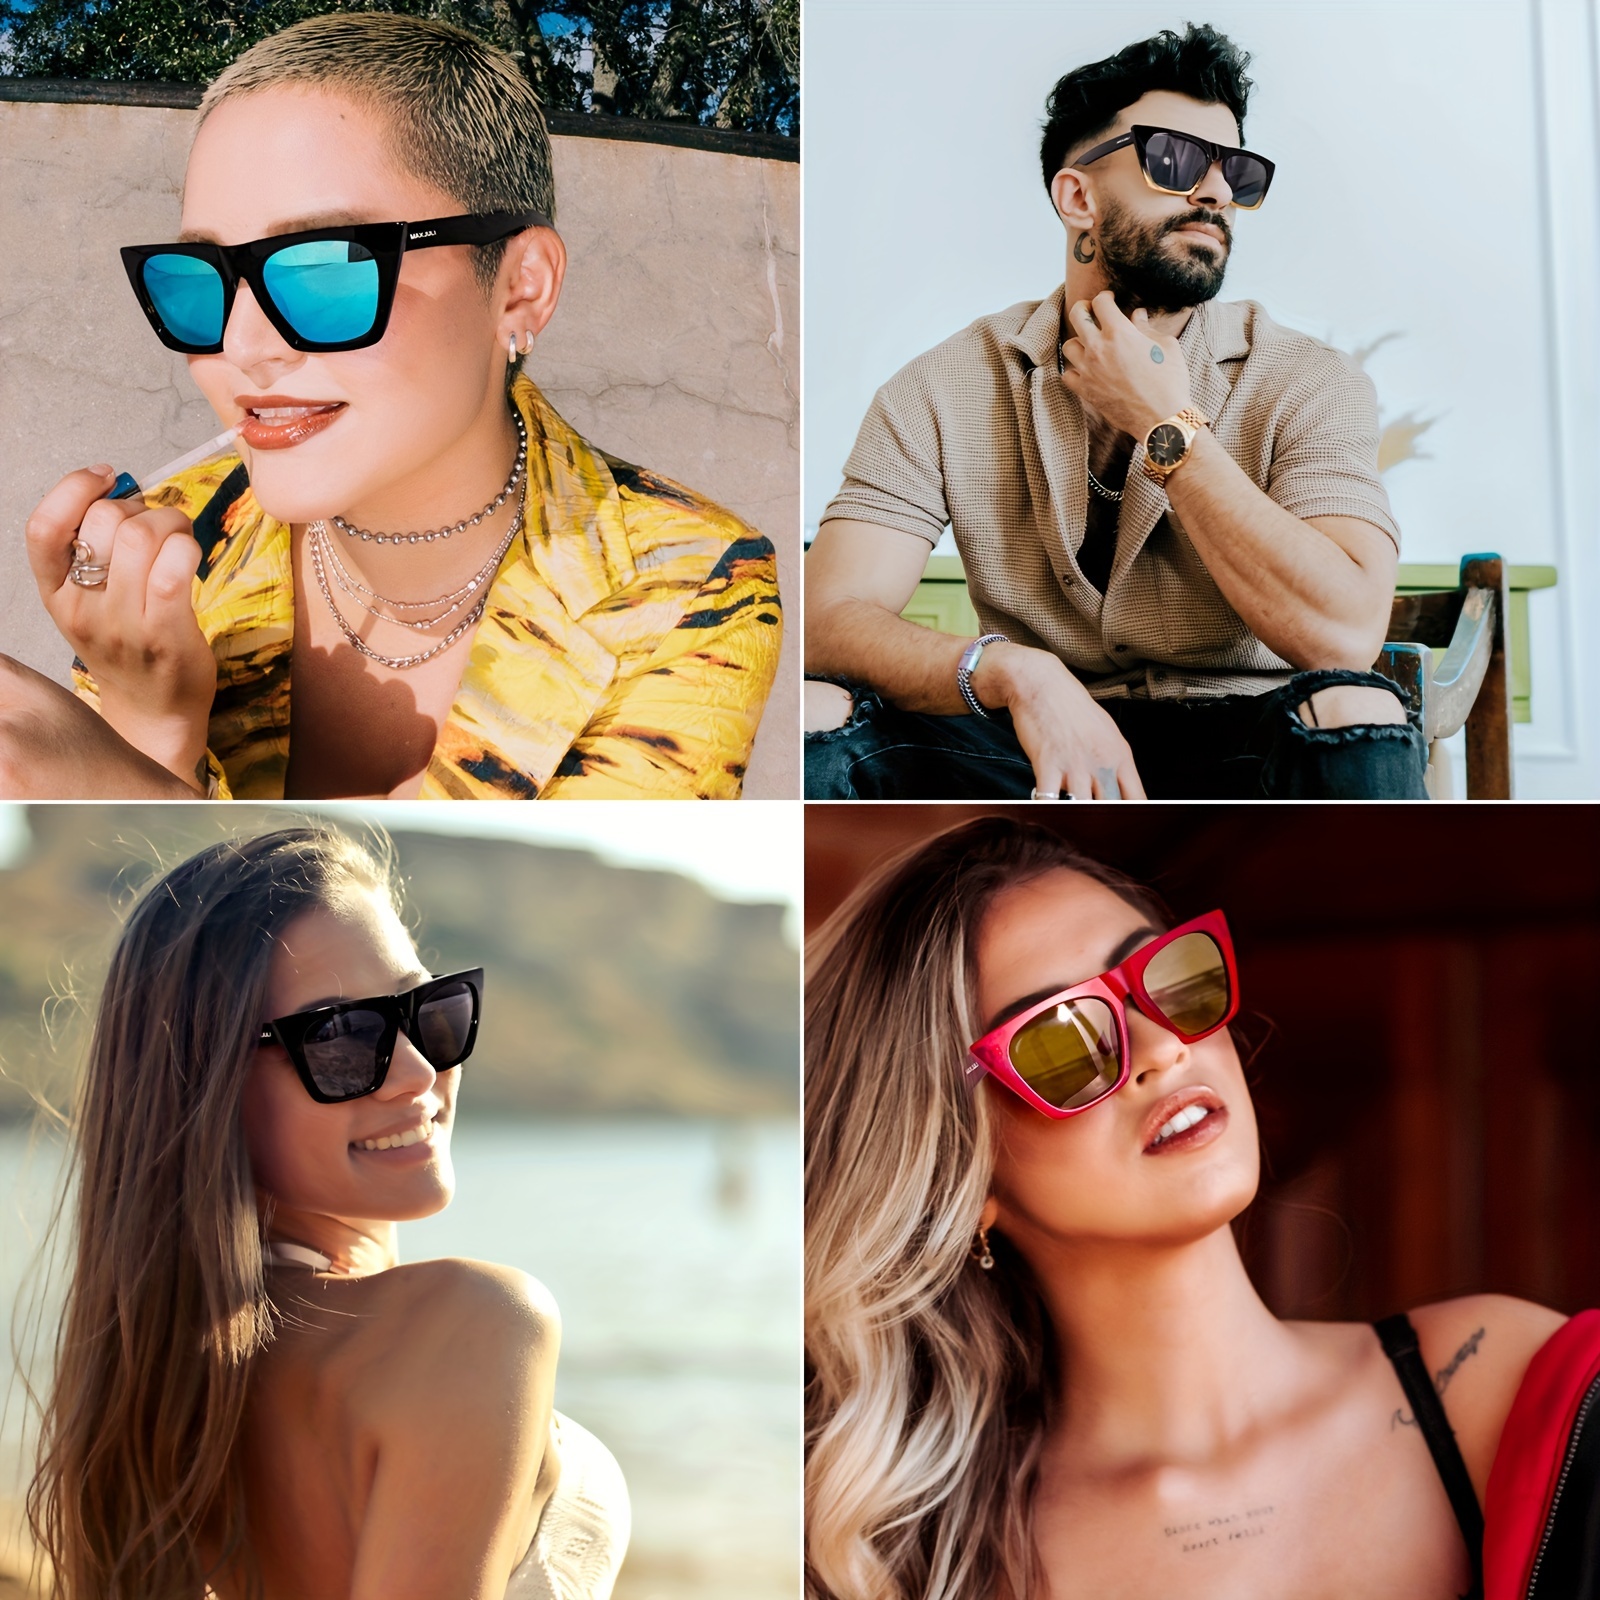 MAXJULI Polarized Big Sunglasses for Men Women with Big Heads UV 400  Protection 8125